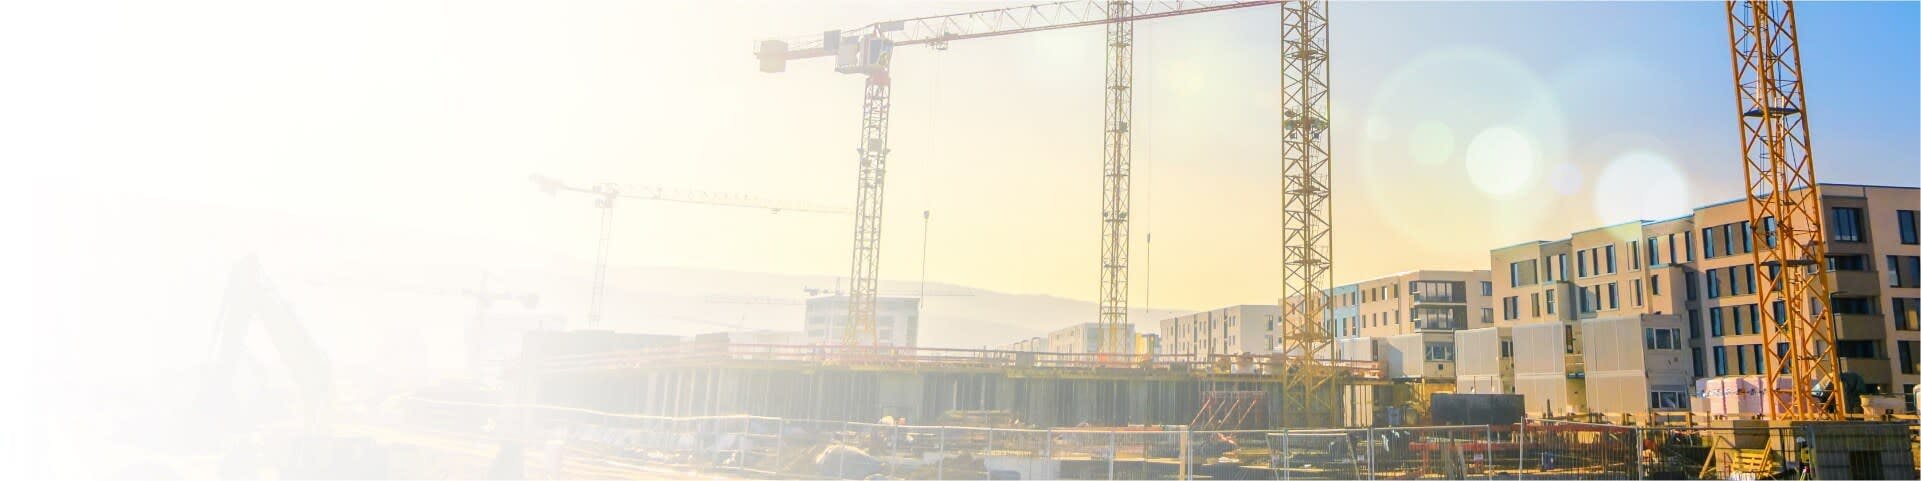 Cranes on a construction job site